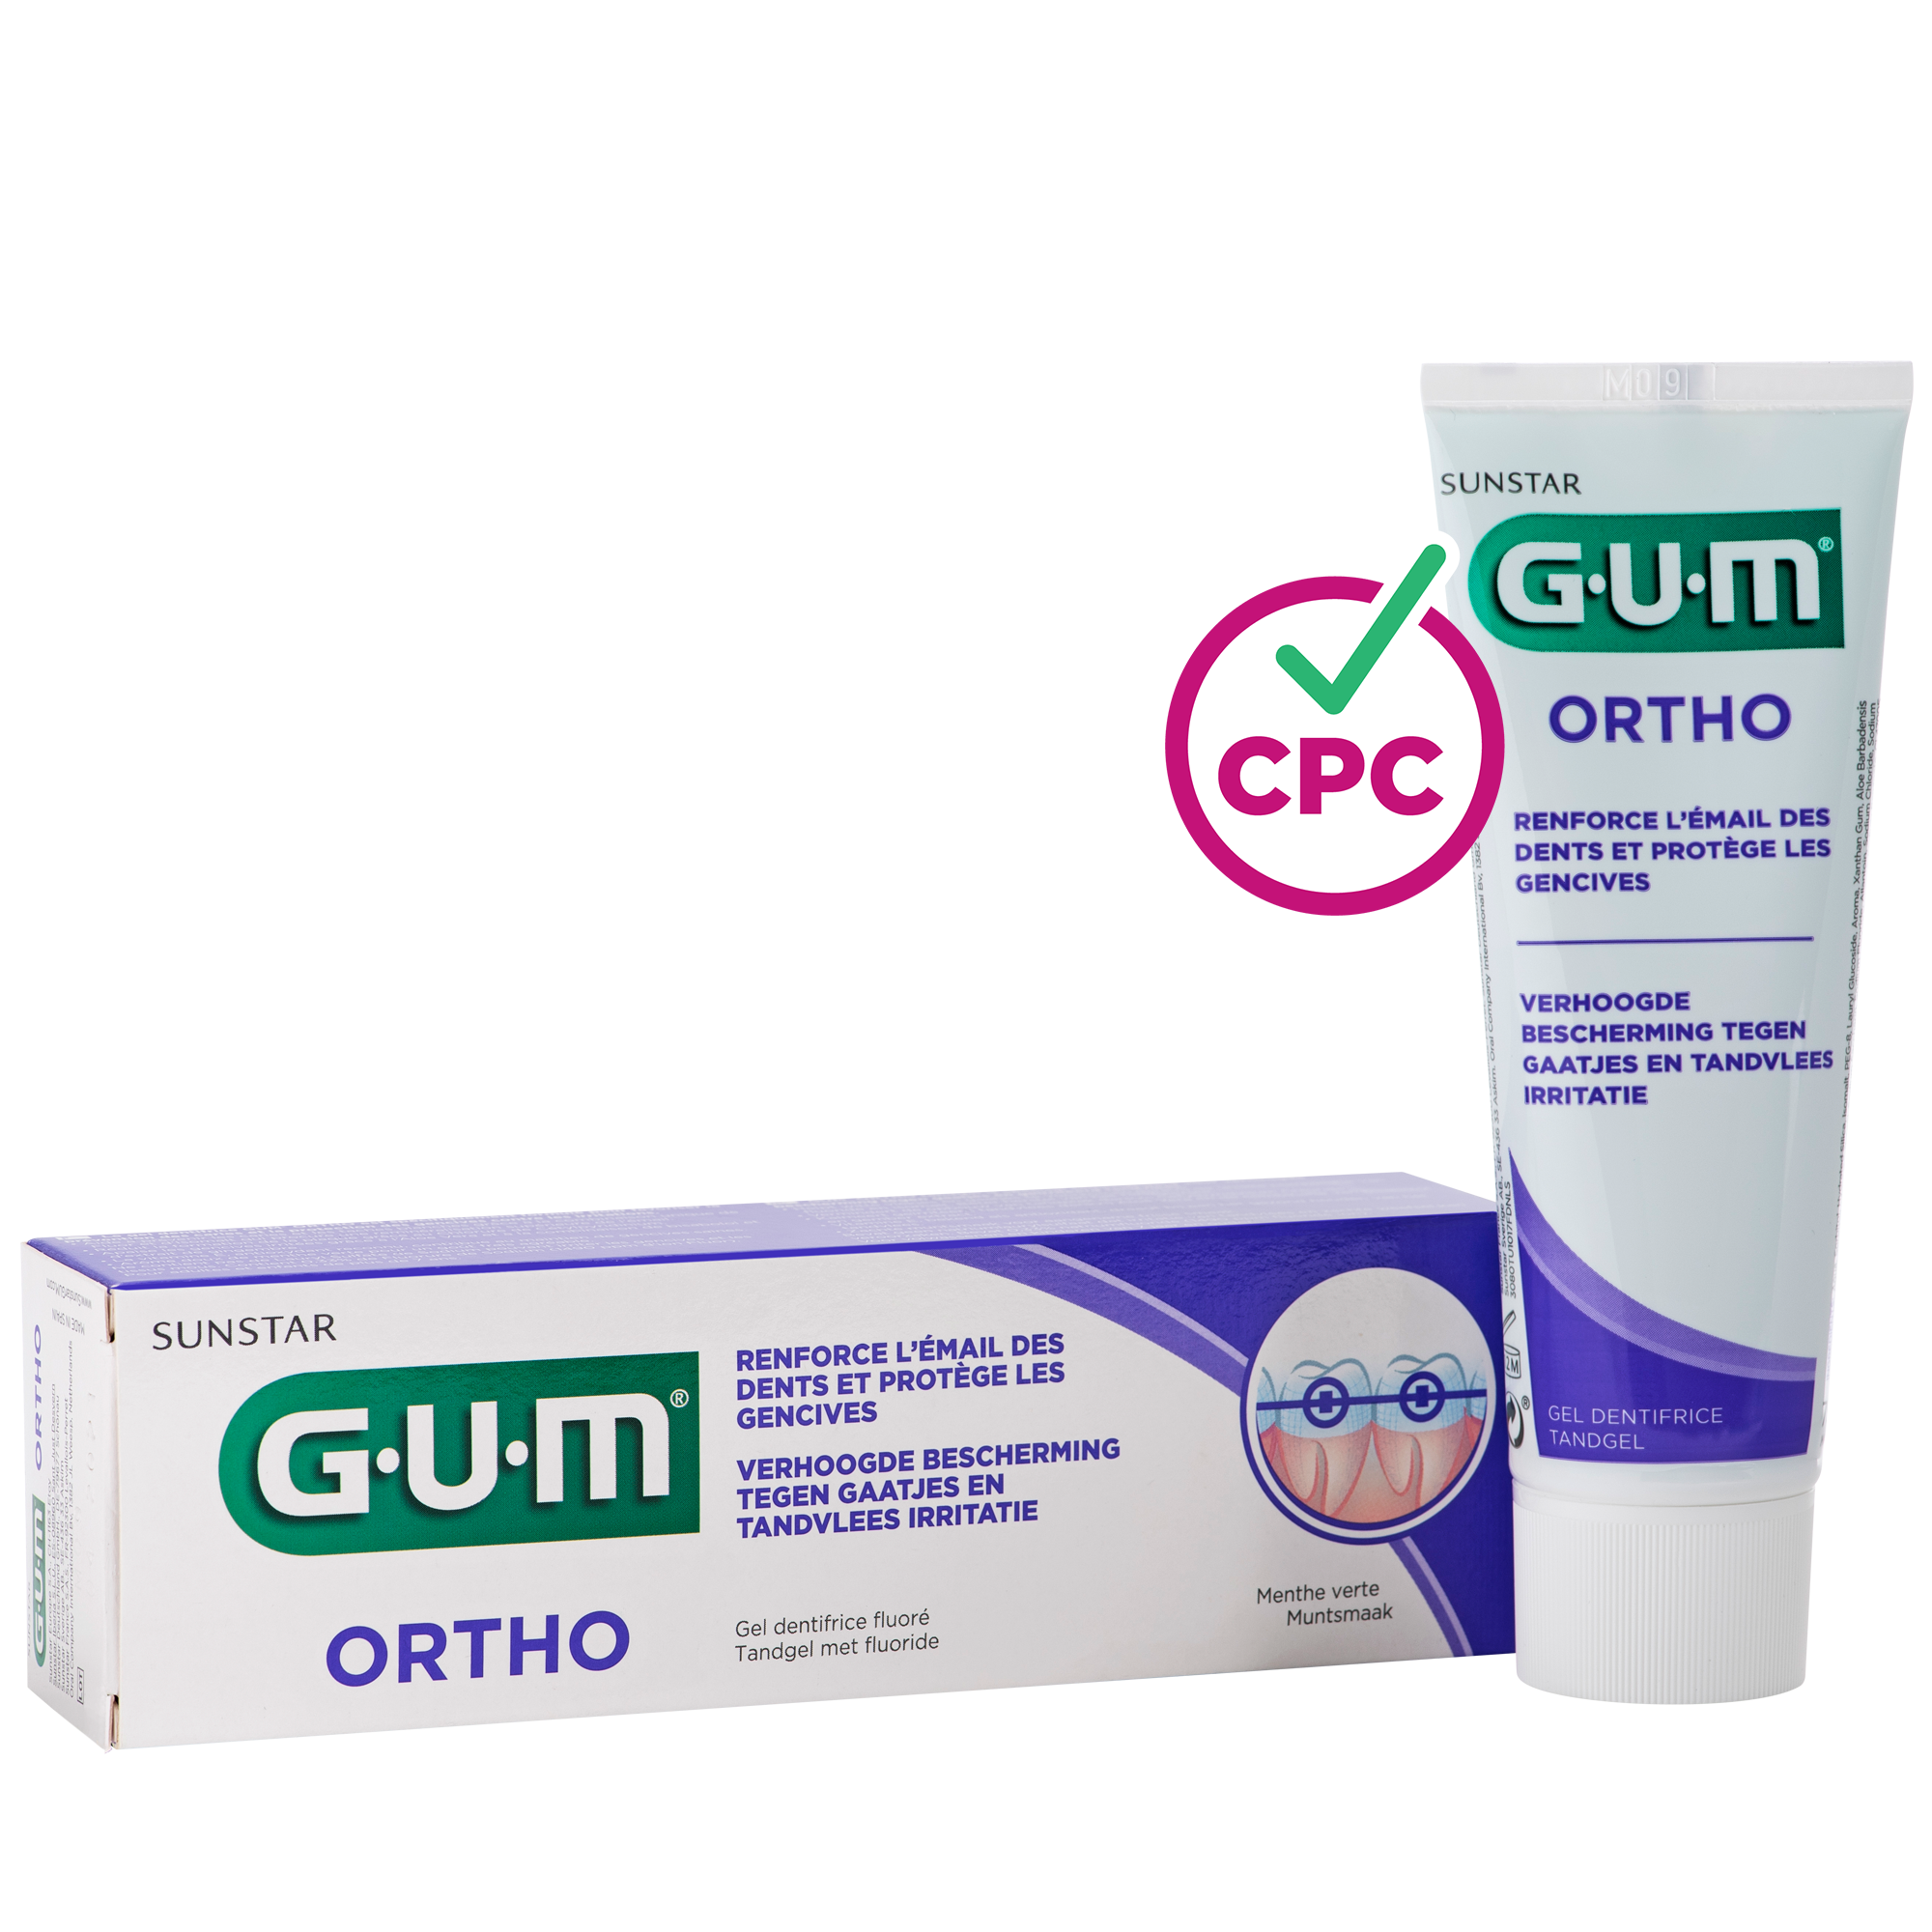 P3080-FR-NL-GUM-Ortho-Toothpaste-75ml-Box-Tube-Angle-CPC